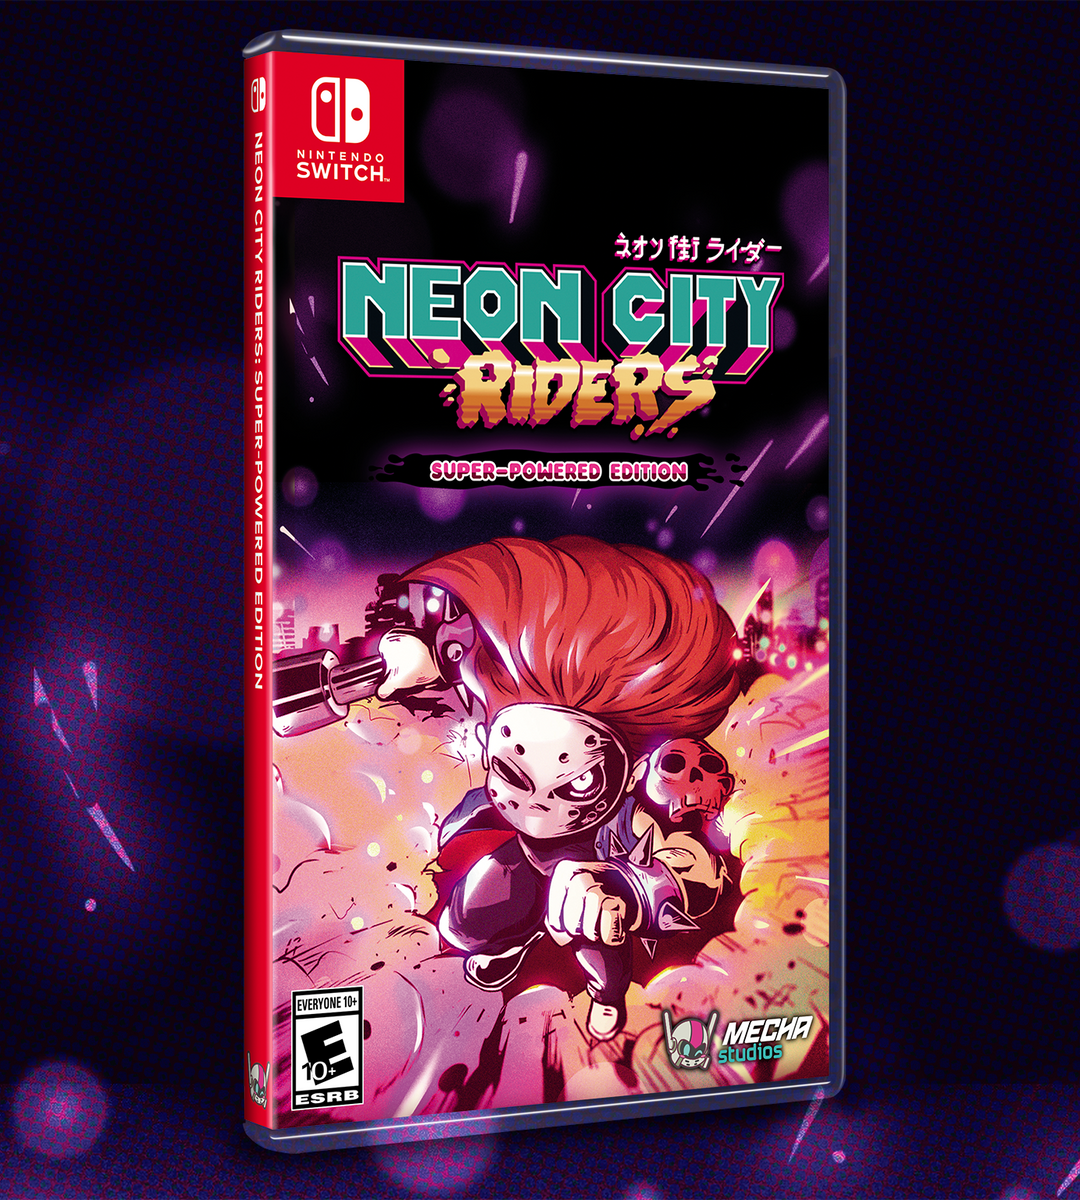 Neon City Riders on Steam